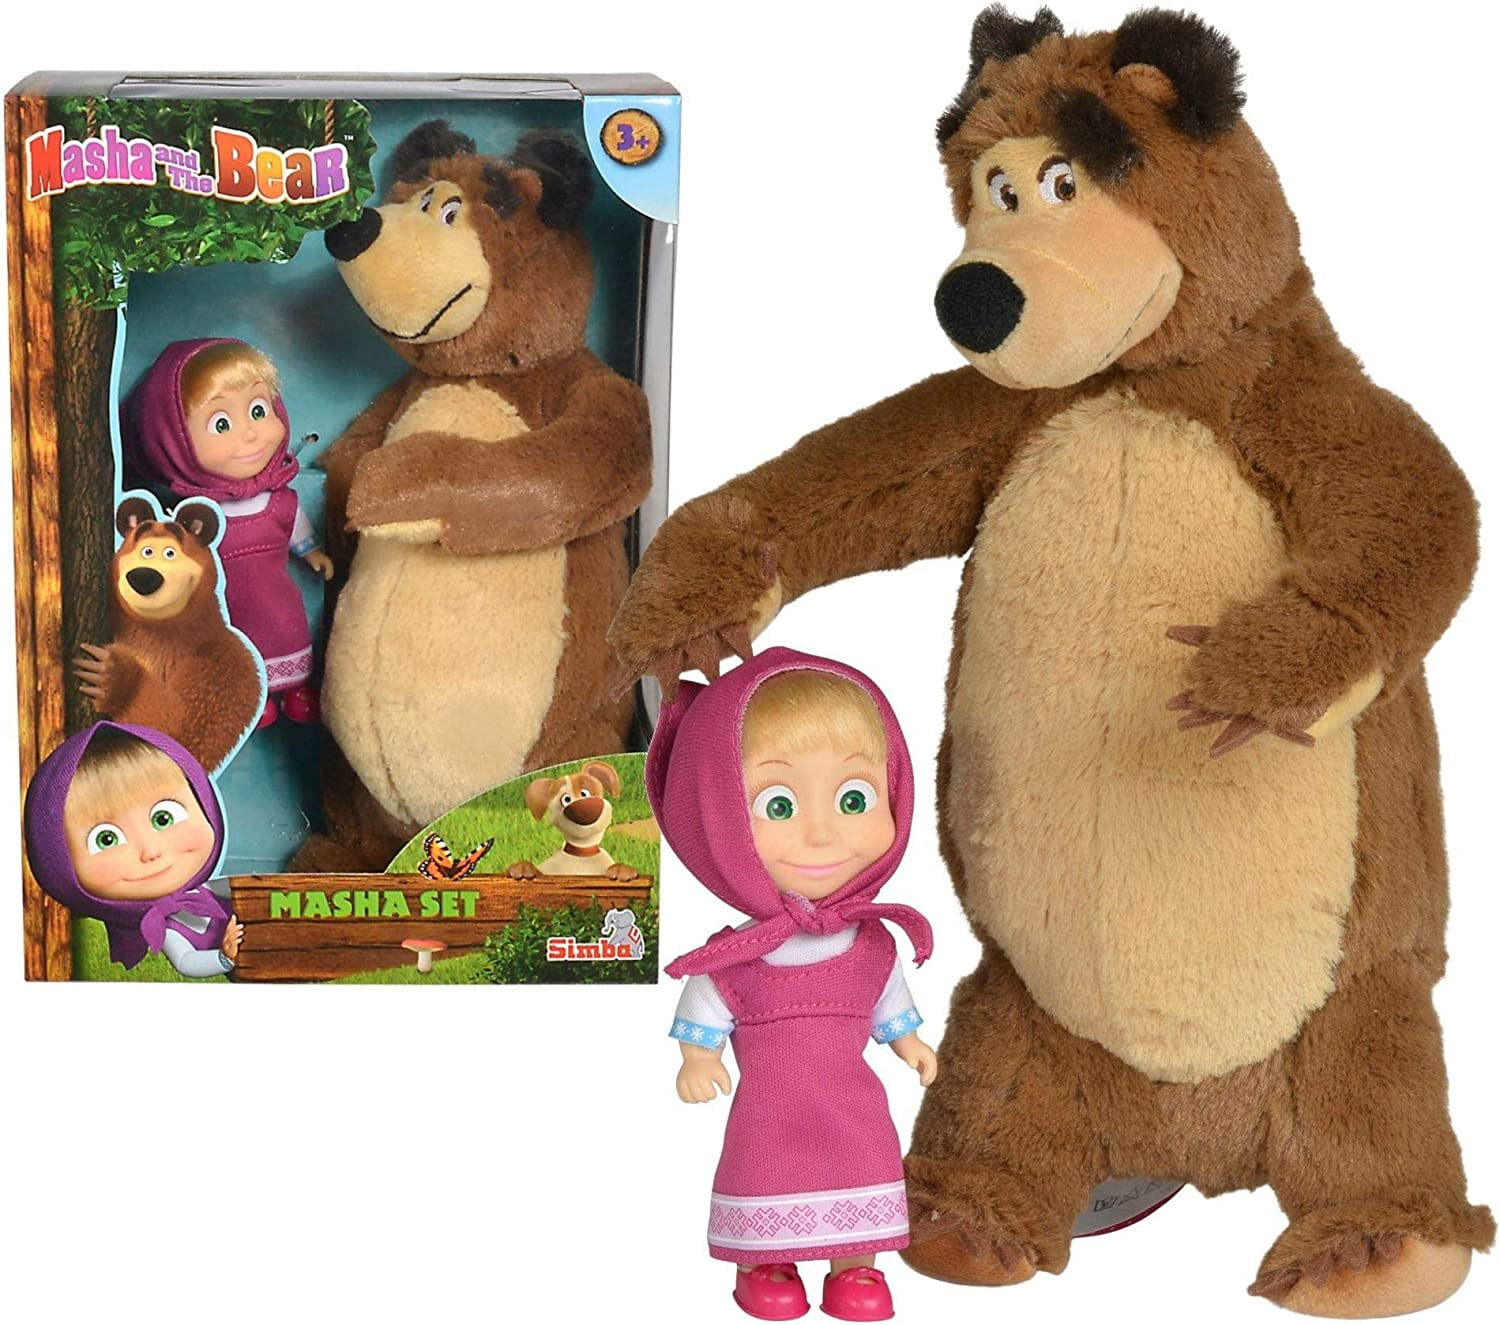 Masha And The Bear Masha Plush Set With Bear And Doll 98 Inches 